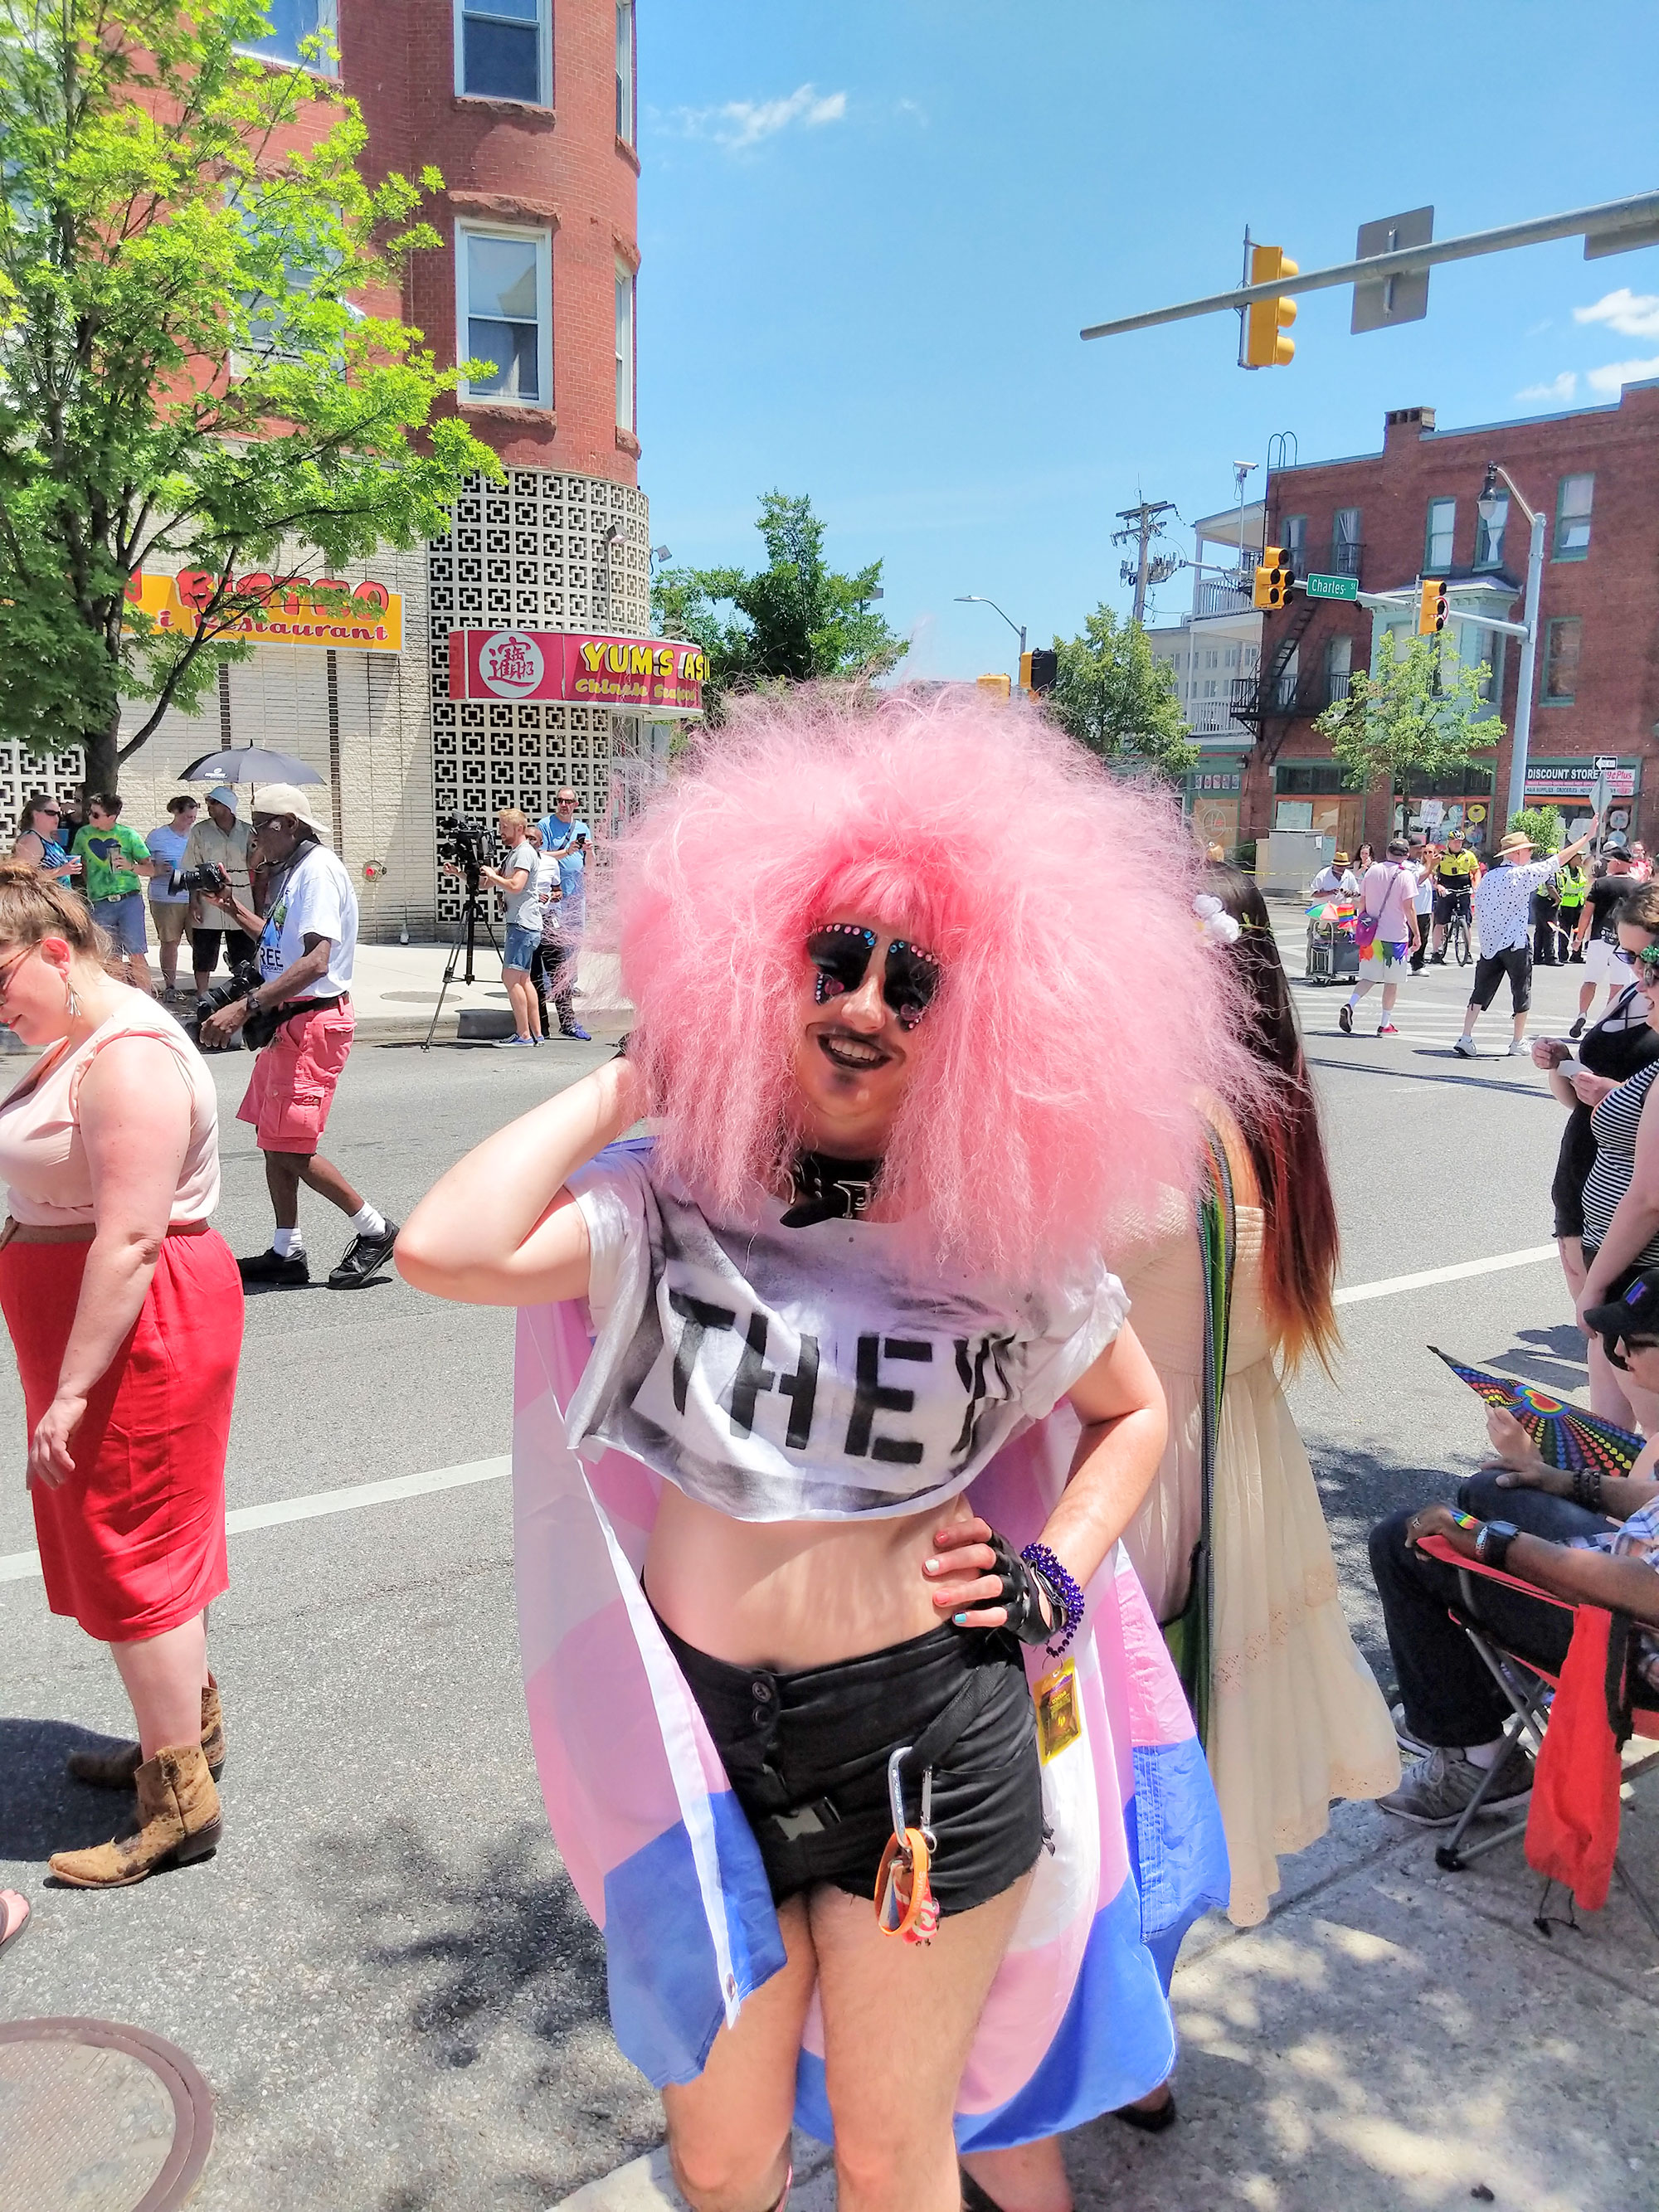 A drag queen at Baltimore pride.